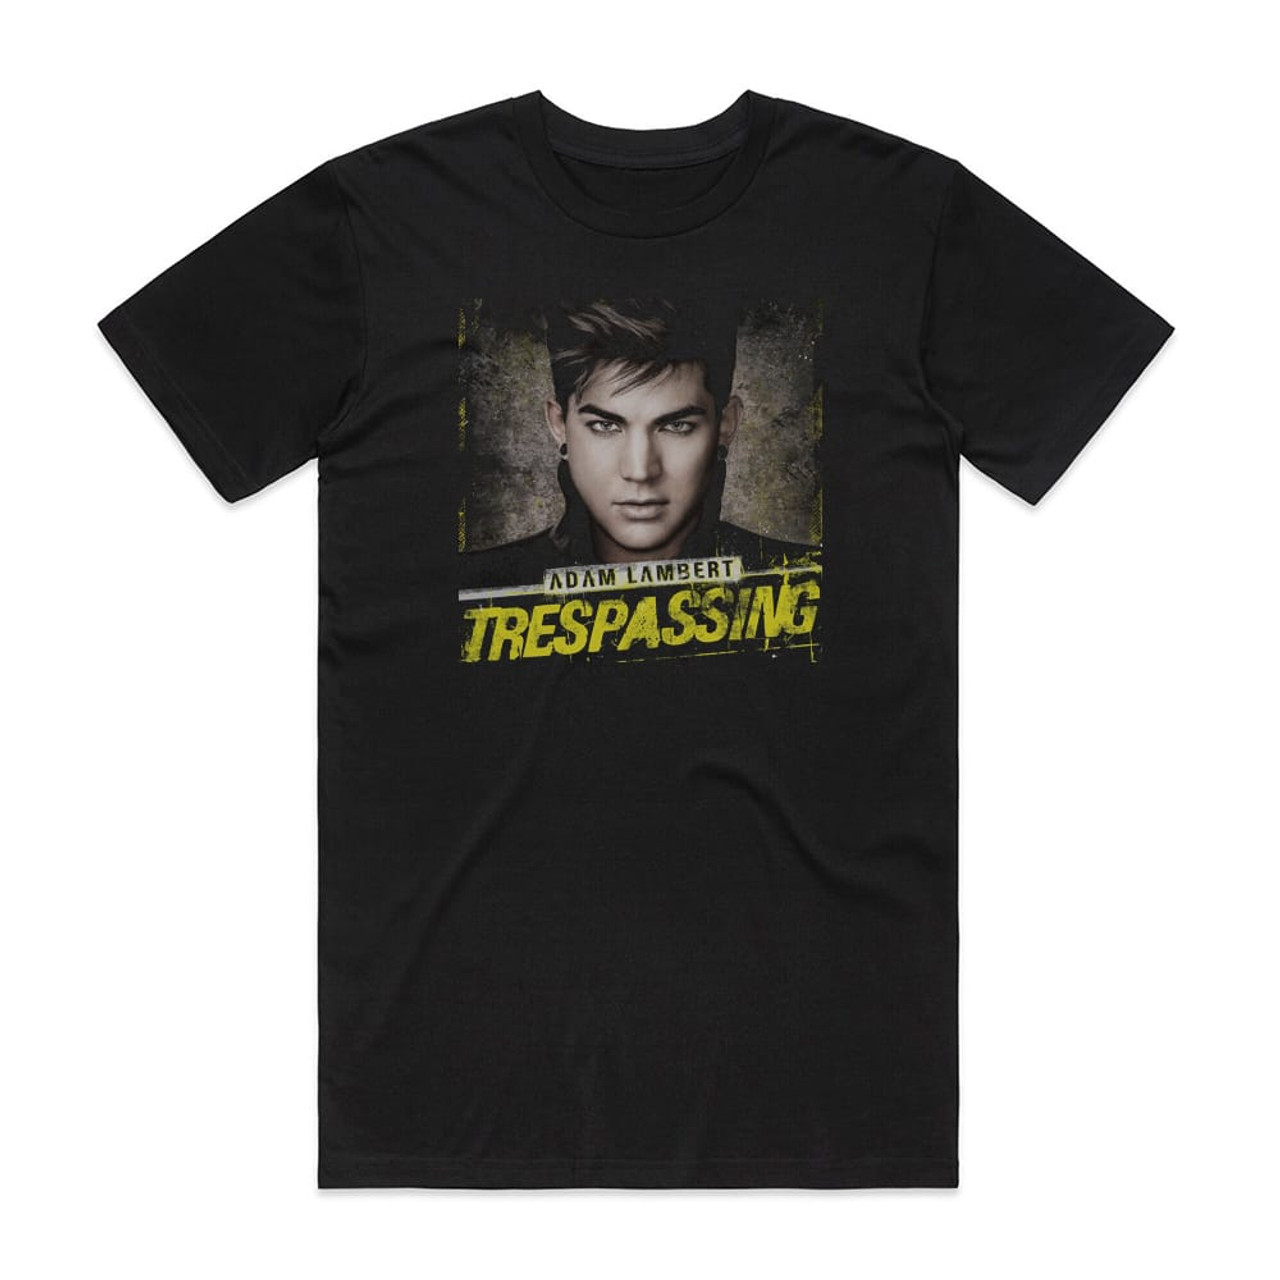 Adam Lambert Trespassing Album Cover T-Shirt Black